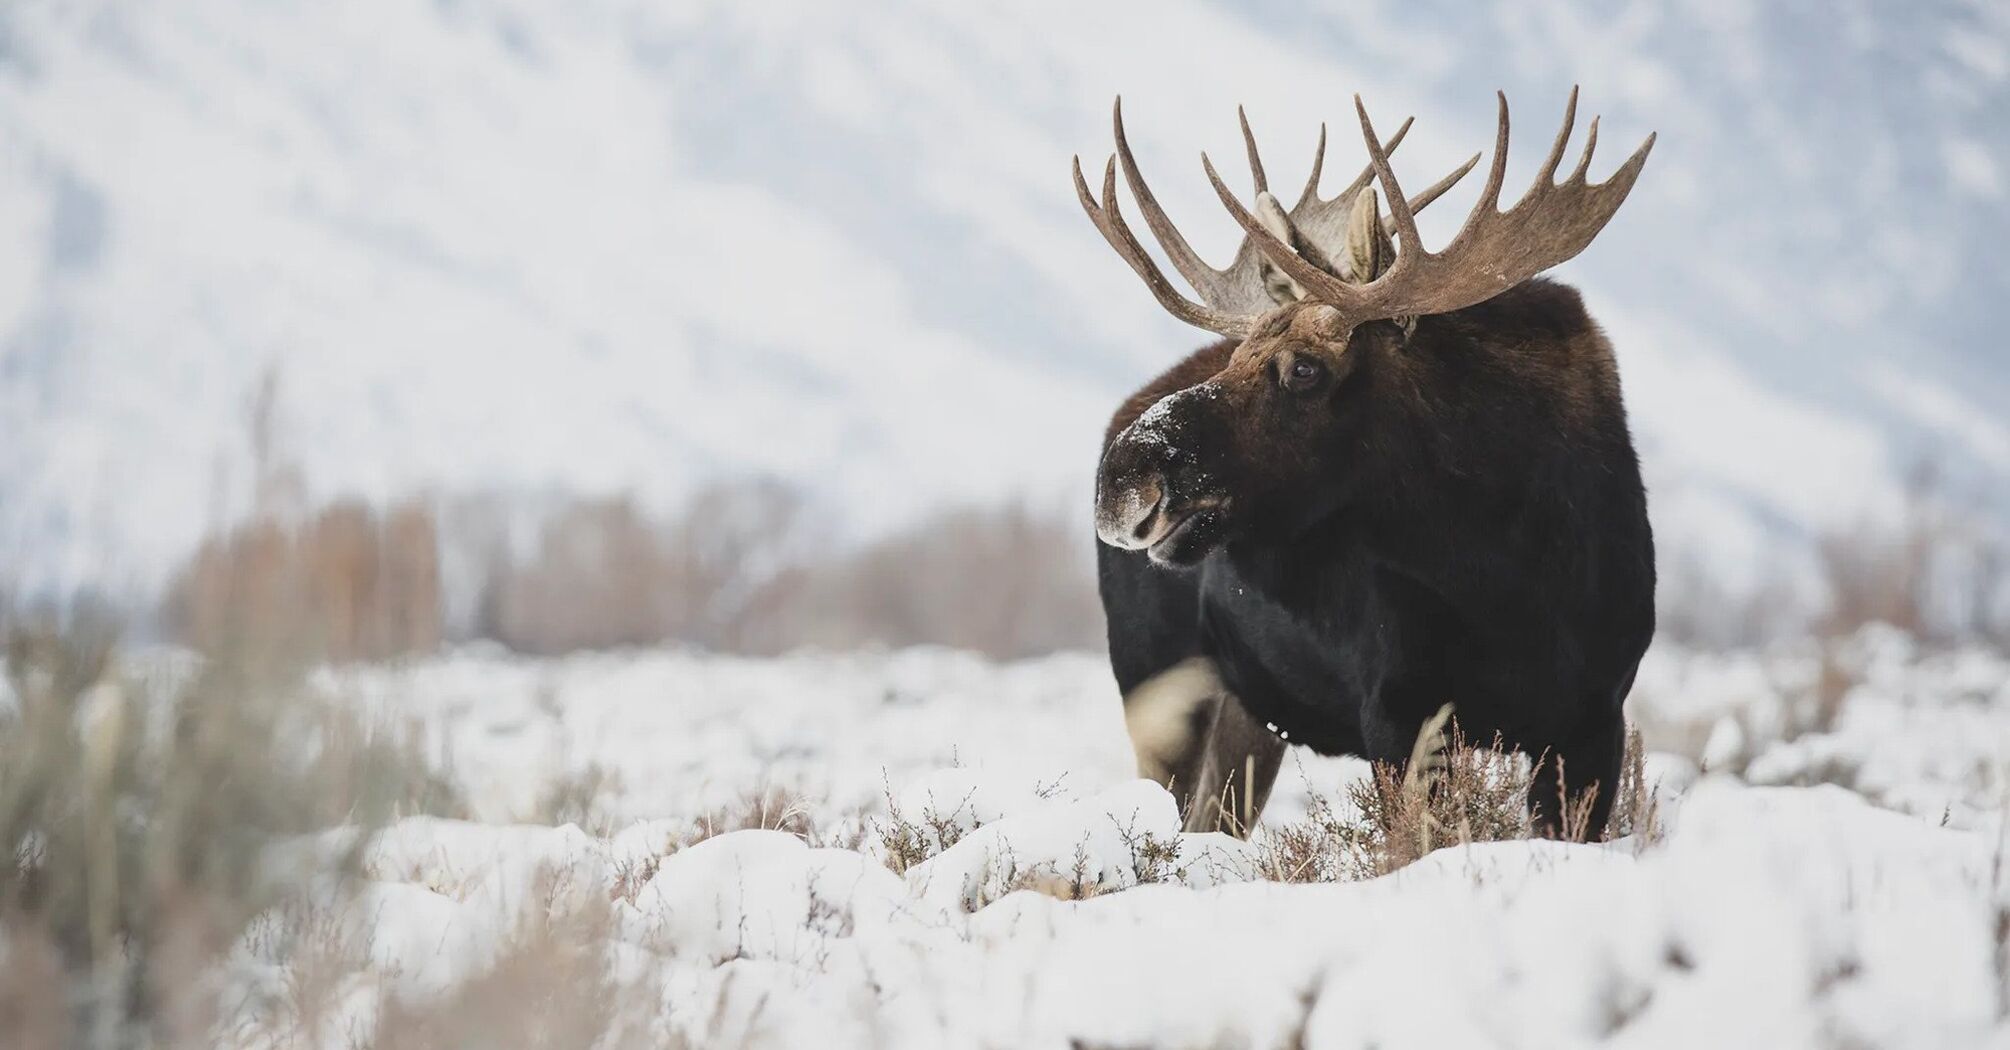 How moose survive in winter